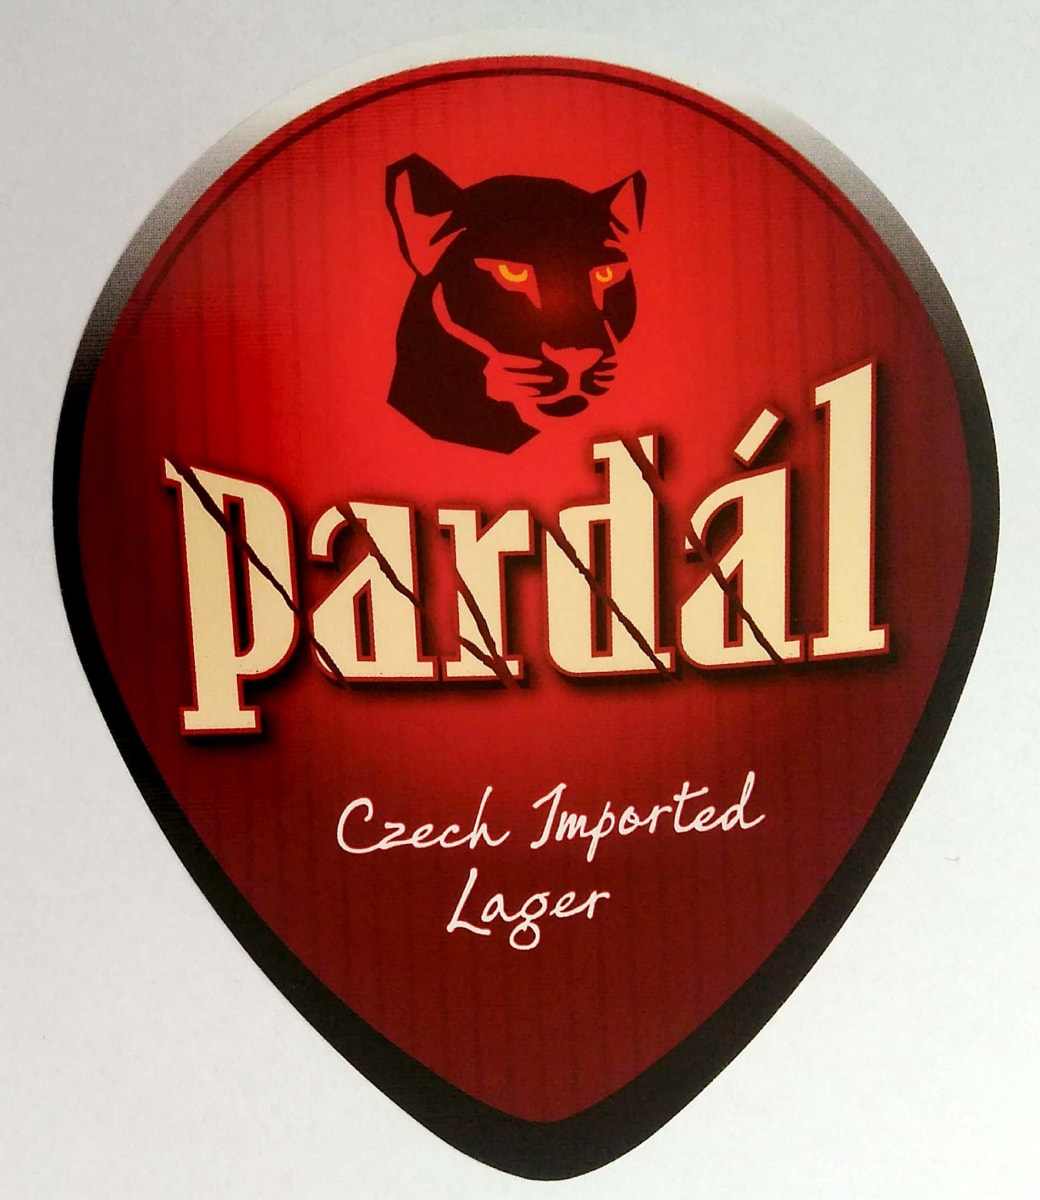 Pardál Czech Imported Lager Etk. A